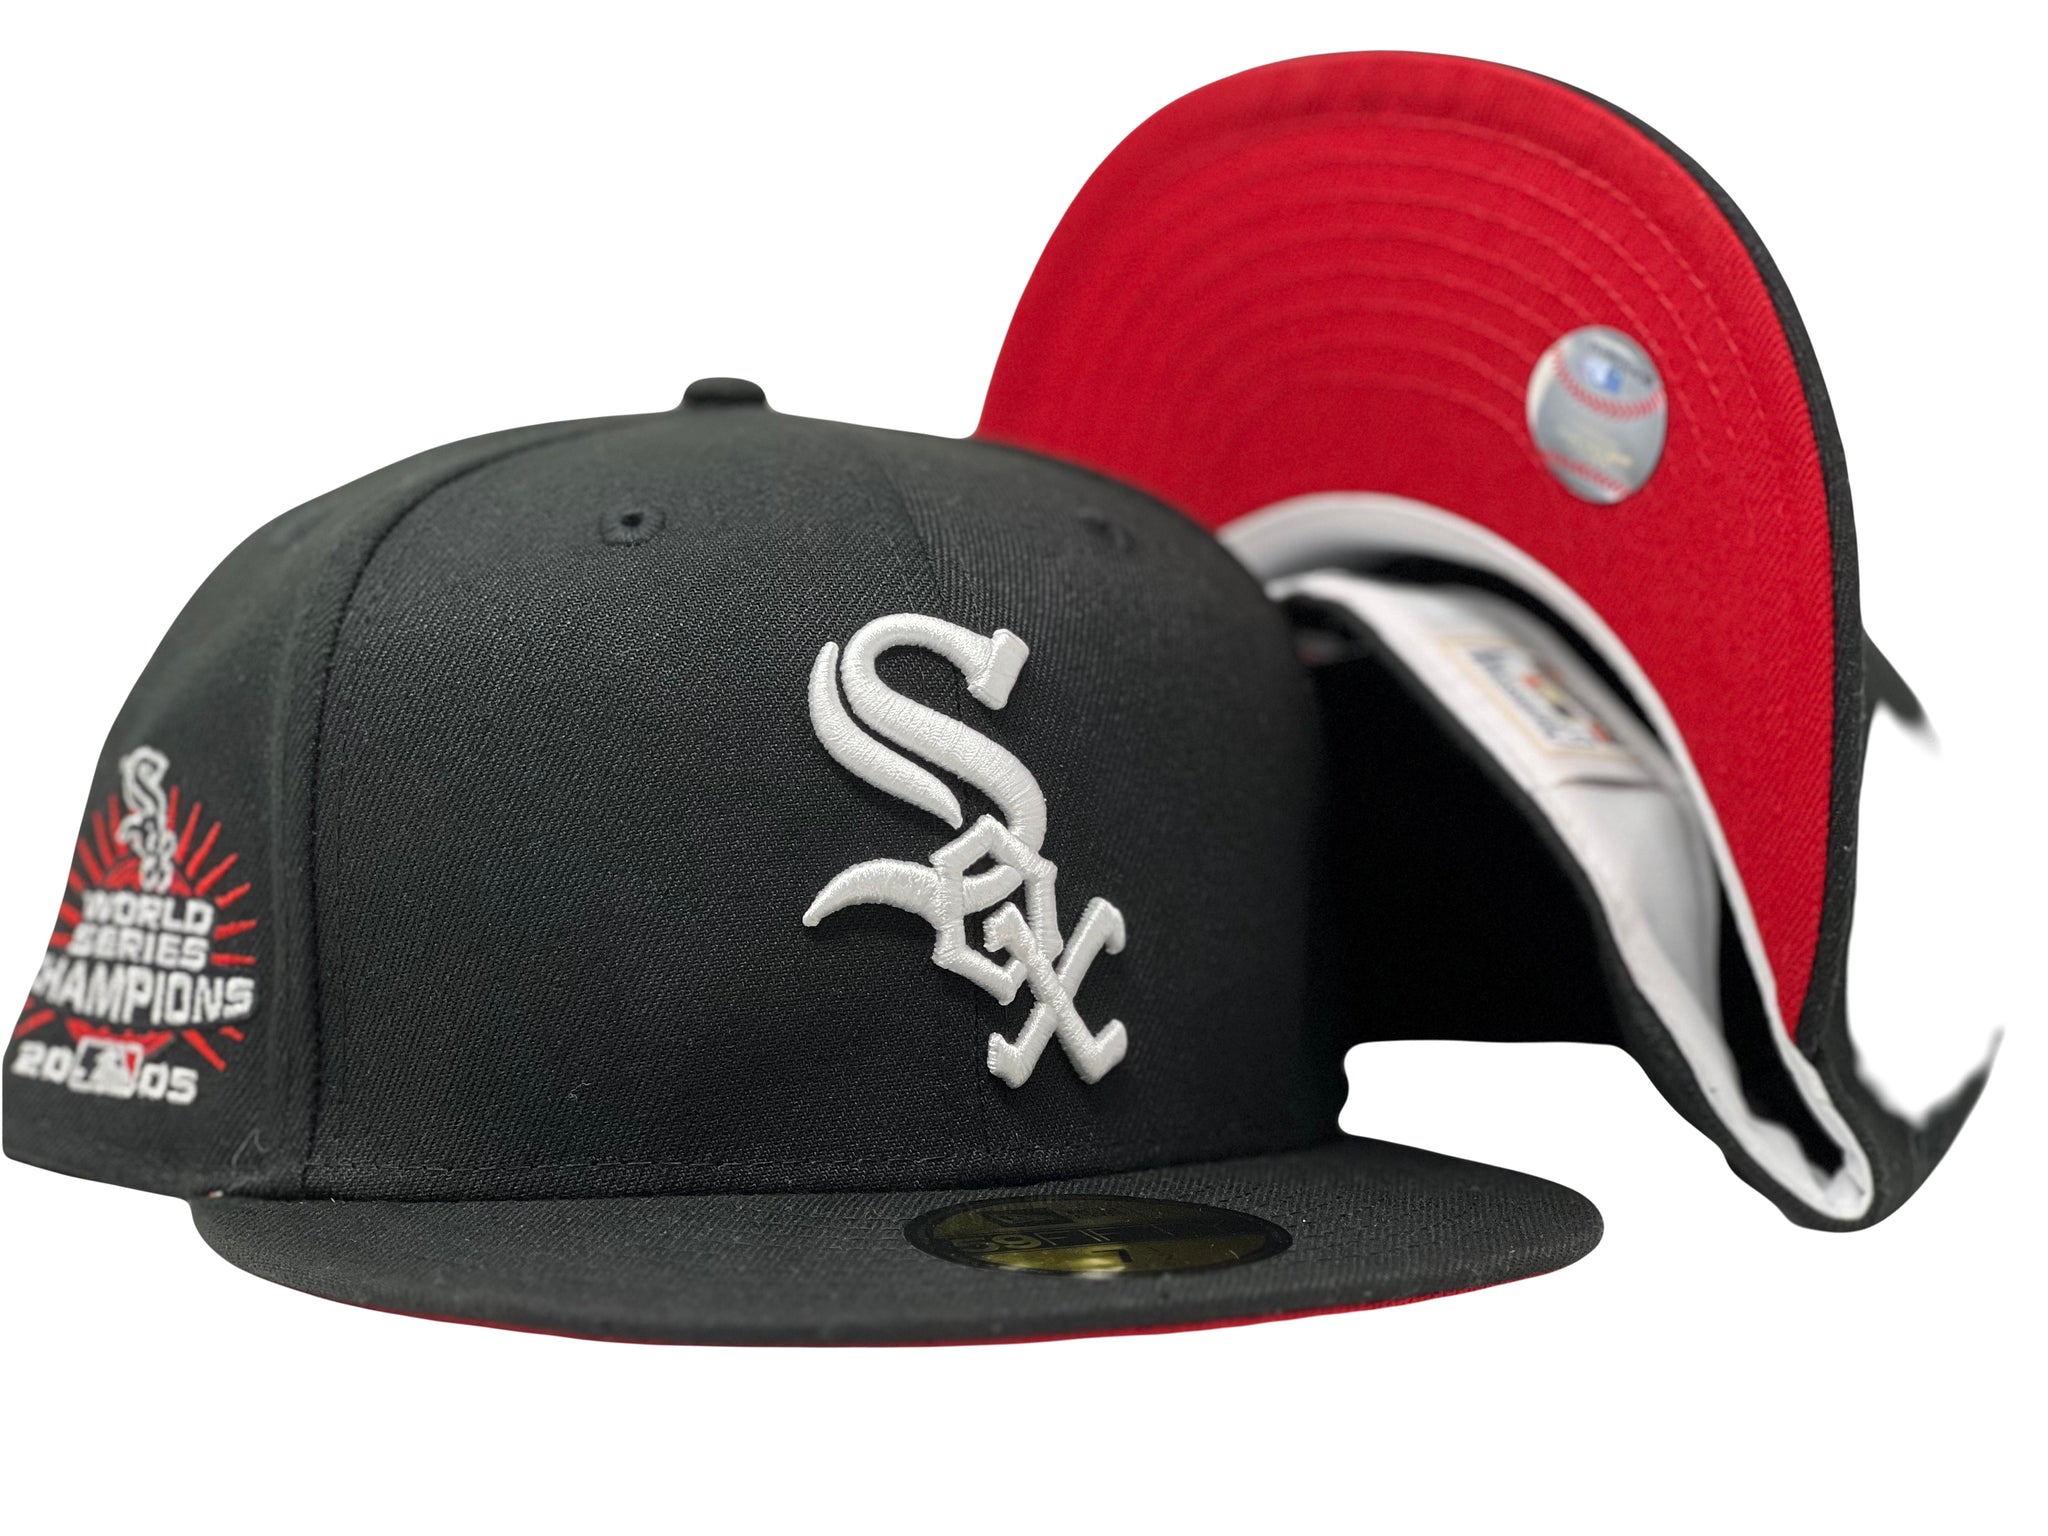 New Era Chicago White Sox Black Fitted Hat MLB 2005 World Series